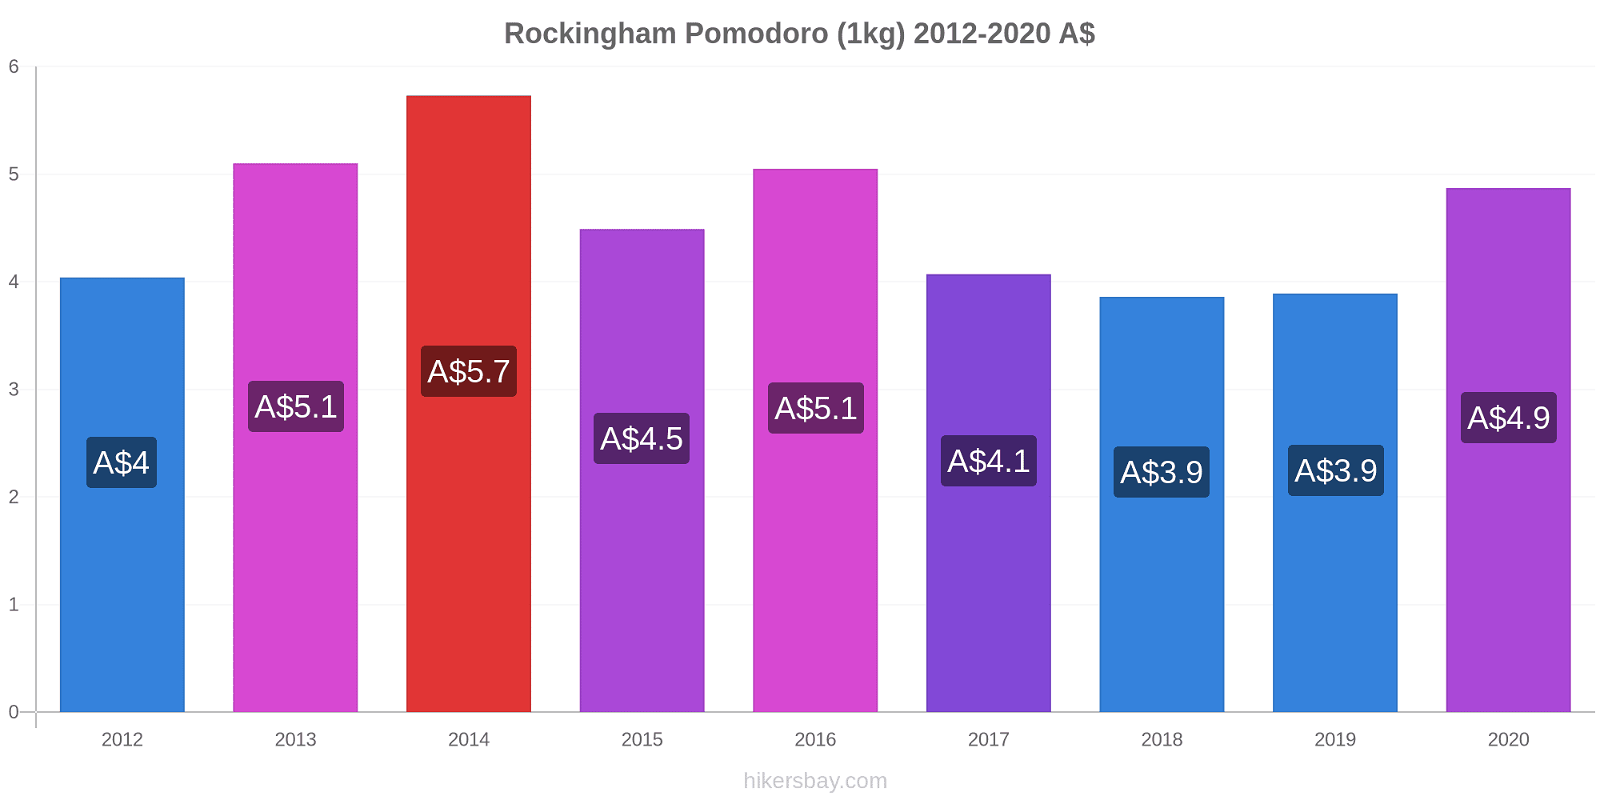 Rockingham variazioni di prezzo Pomodoro (1kg) hikersbay.com